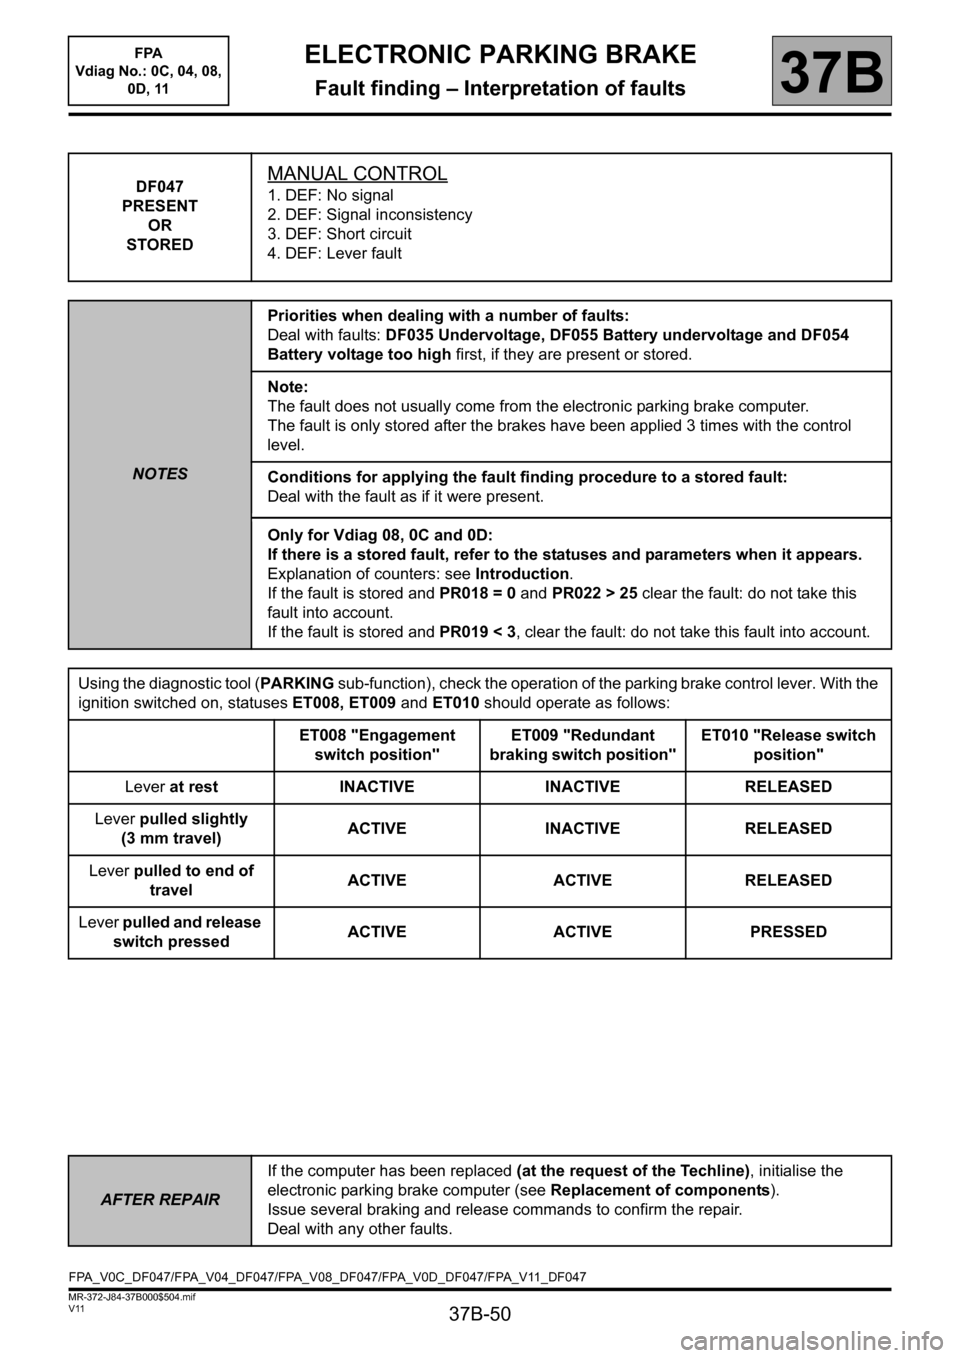 RENAULT SCENIC 2013 J95 / 3.G Electronic Parking Brake Owners Manual 37B-50
MR-372-J84-37B000$504.mif
V11
ELECTRONIC PARKING BRAKE
Fault finding – Interpretation of faults
FPA  
Vdiag No.: 0C, 04, 08, 
0D, 11
37B
DF047
PRESENT
OR
STOREDMANUAL CONTROL
1. DEF: No signa